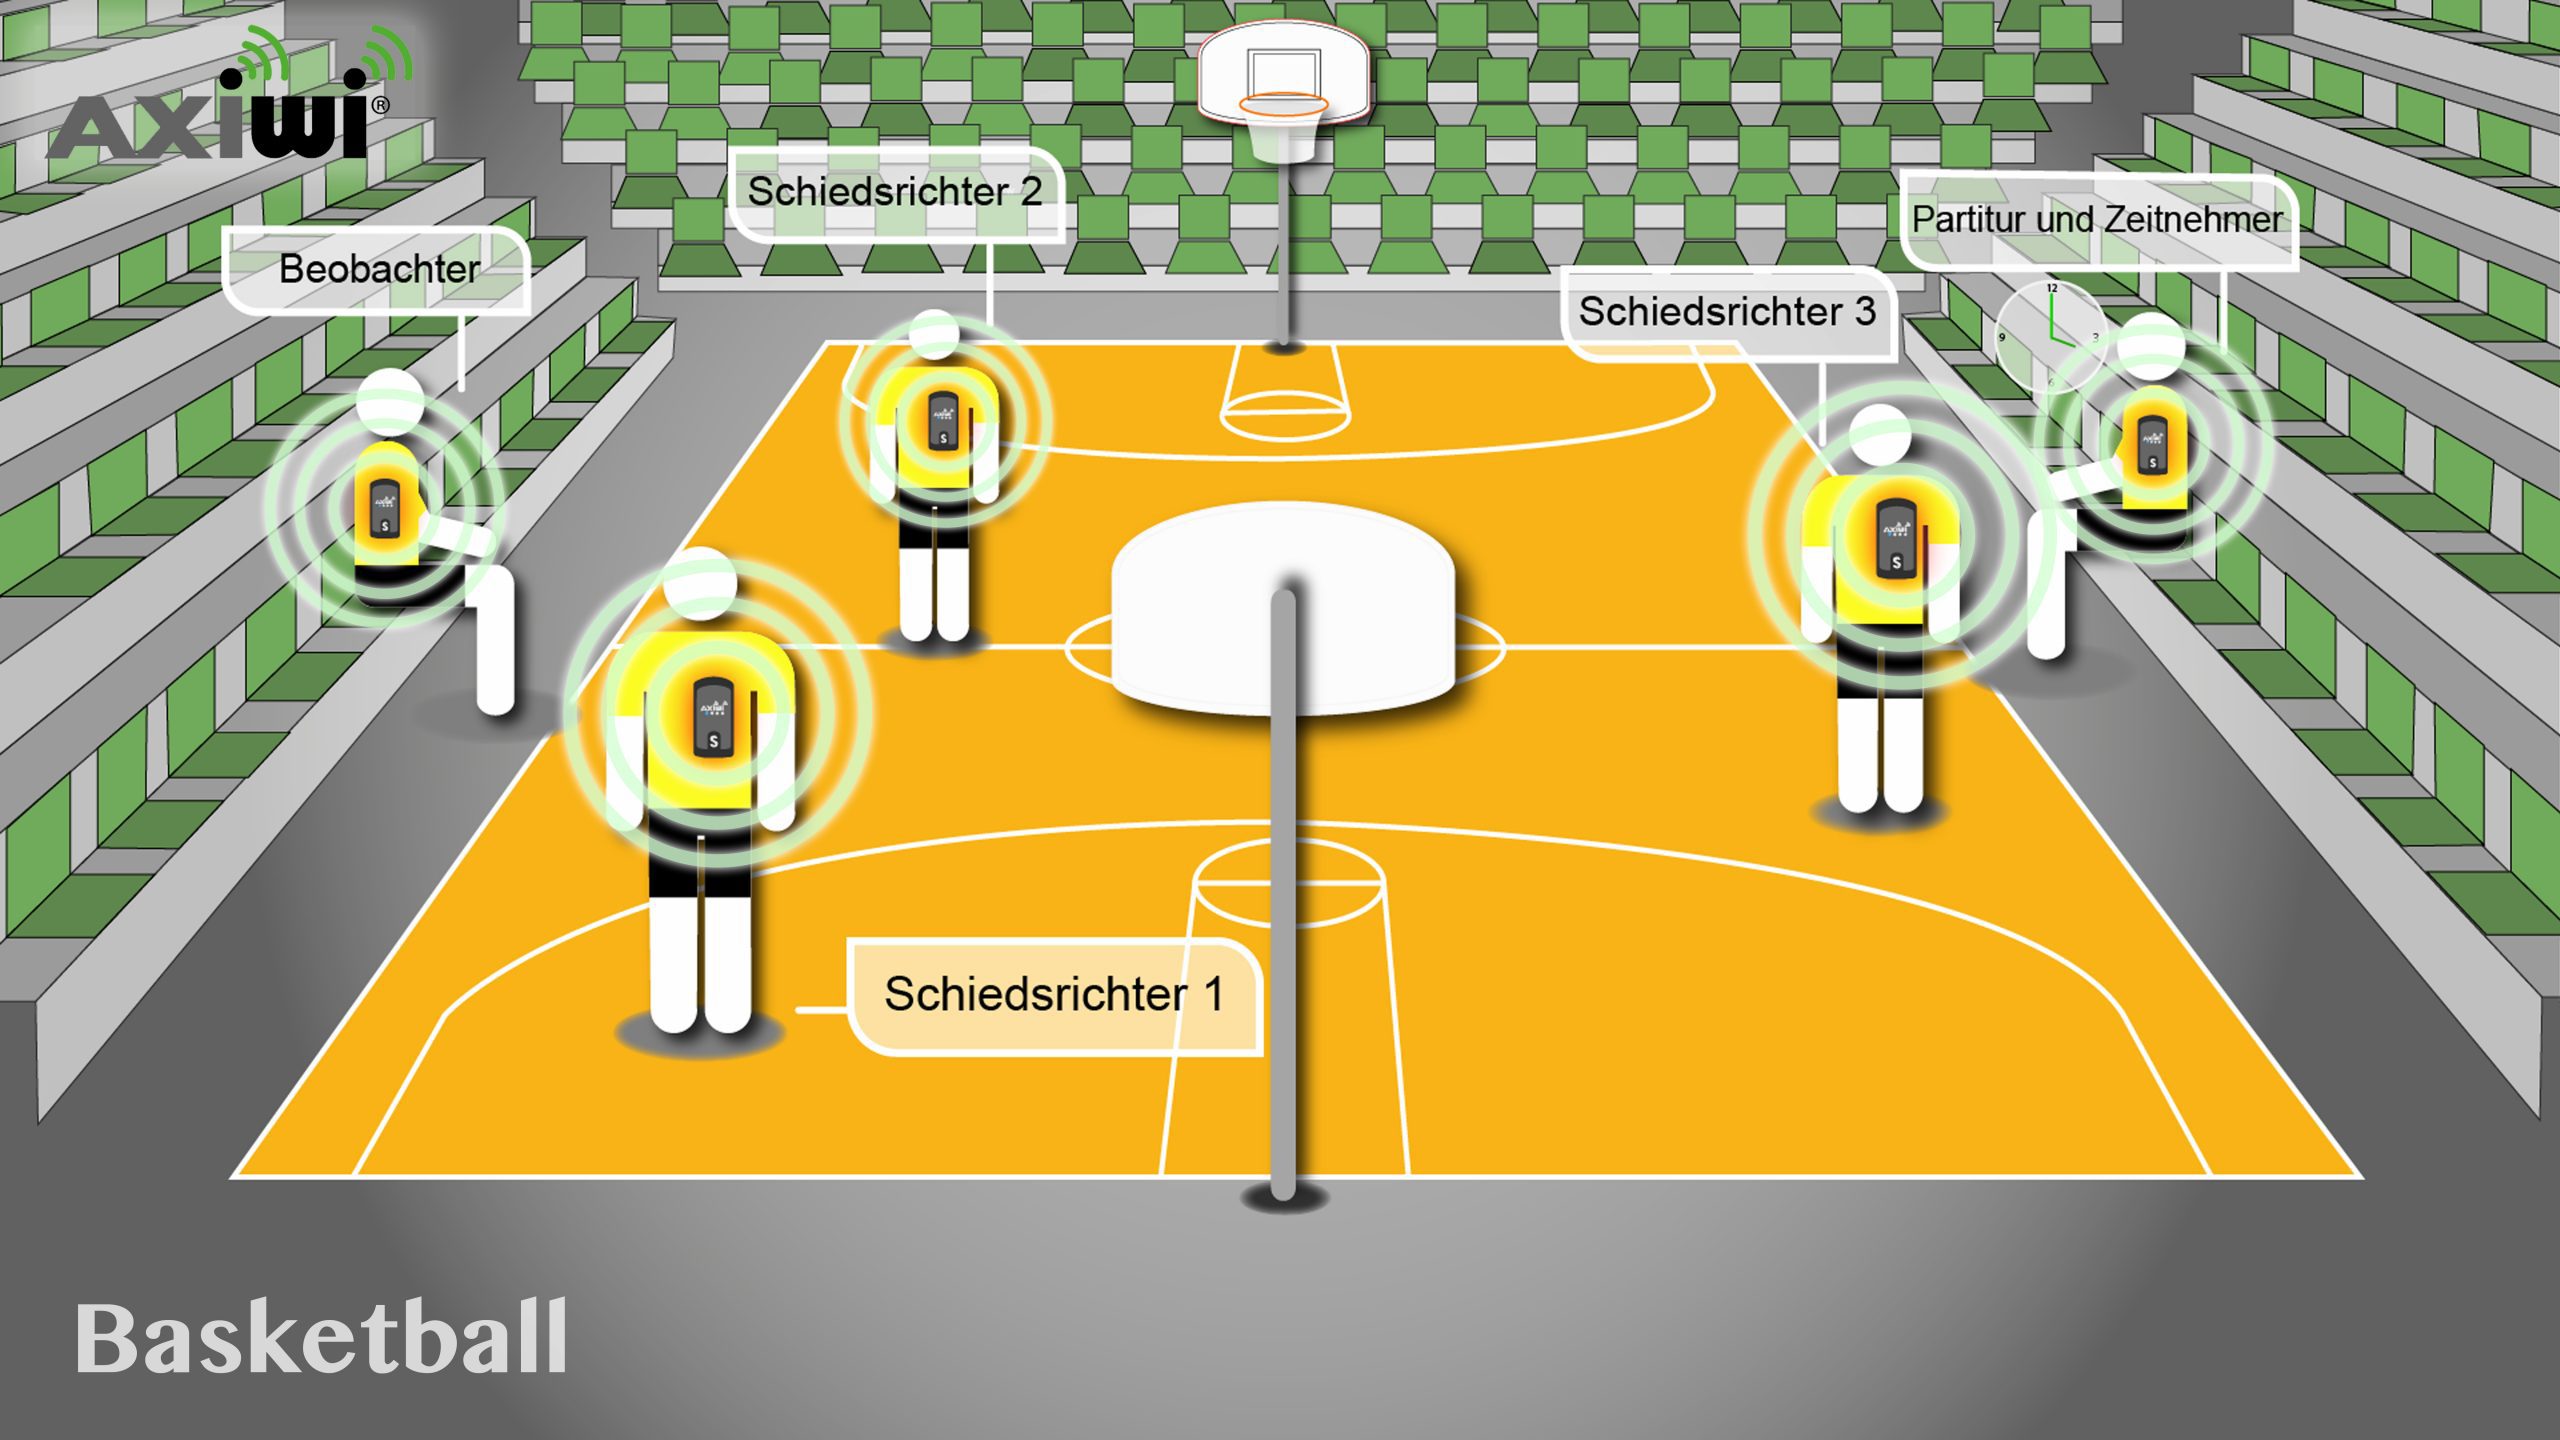 axiwi-kommunikationssystem-schiedsrichter-basketball